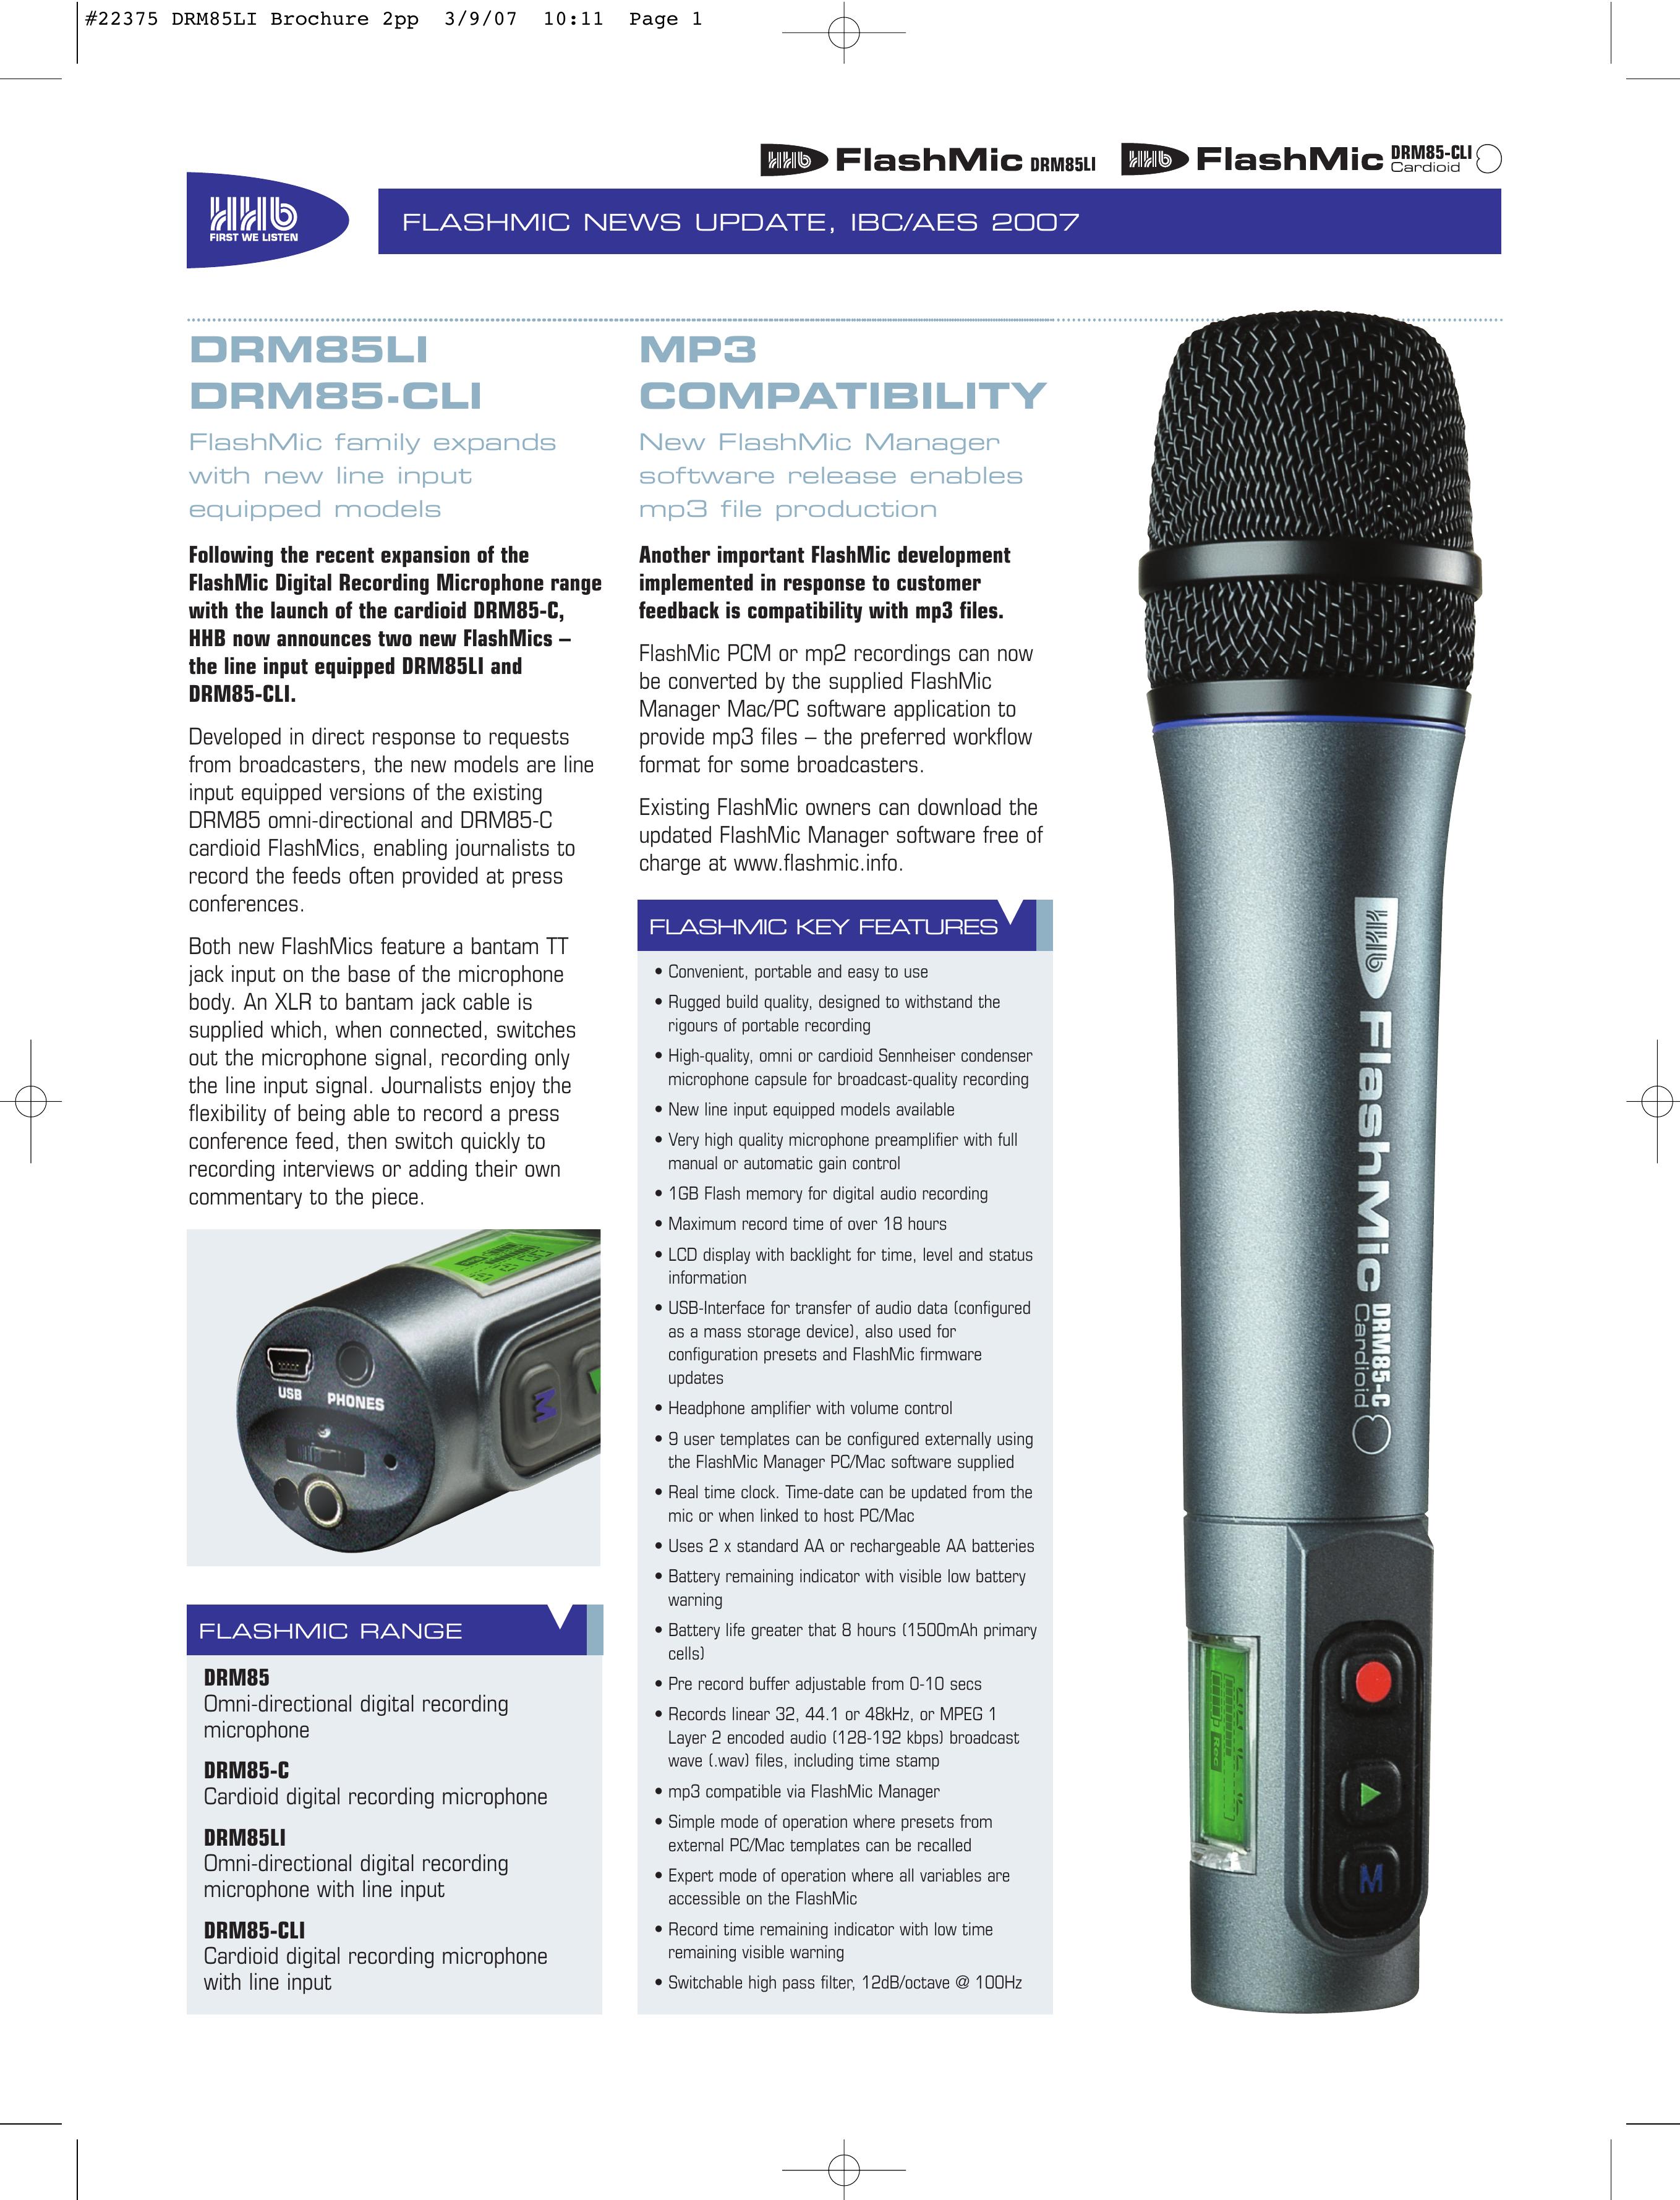 HHB comm DRM85-CLI Microphone User Manual